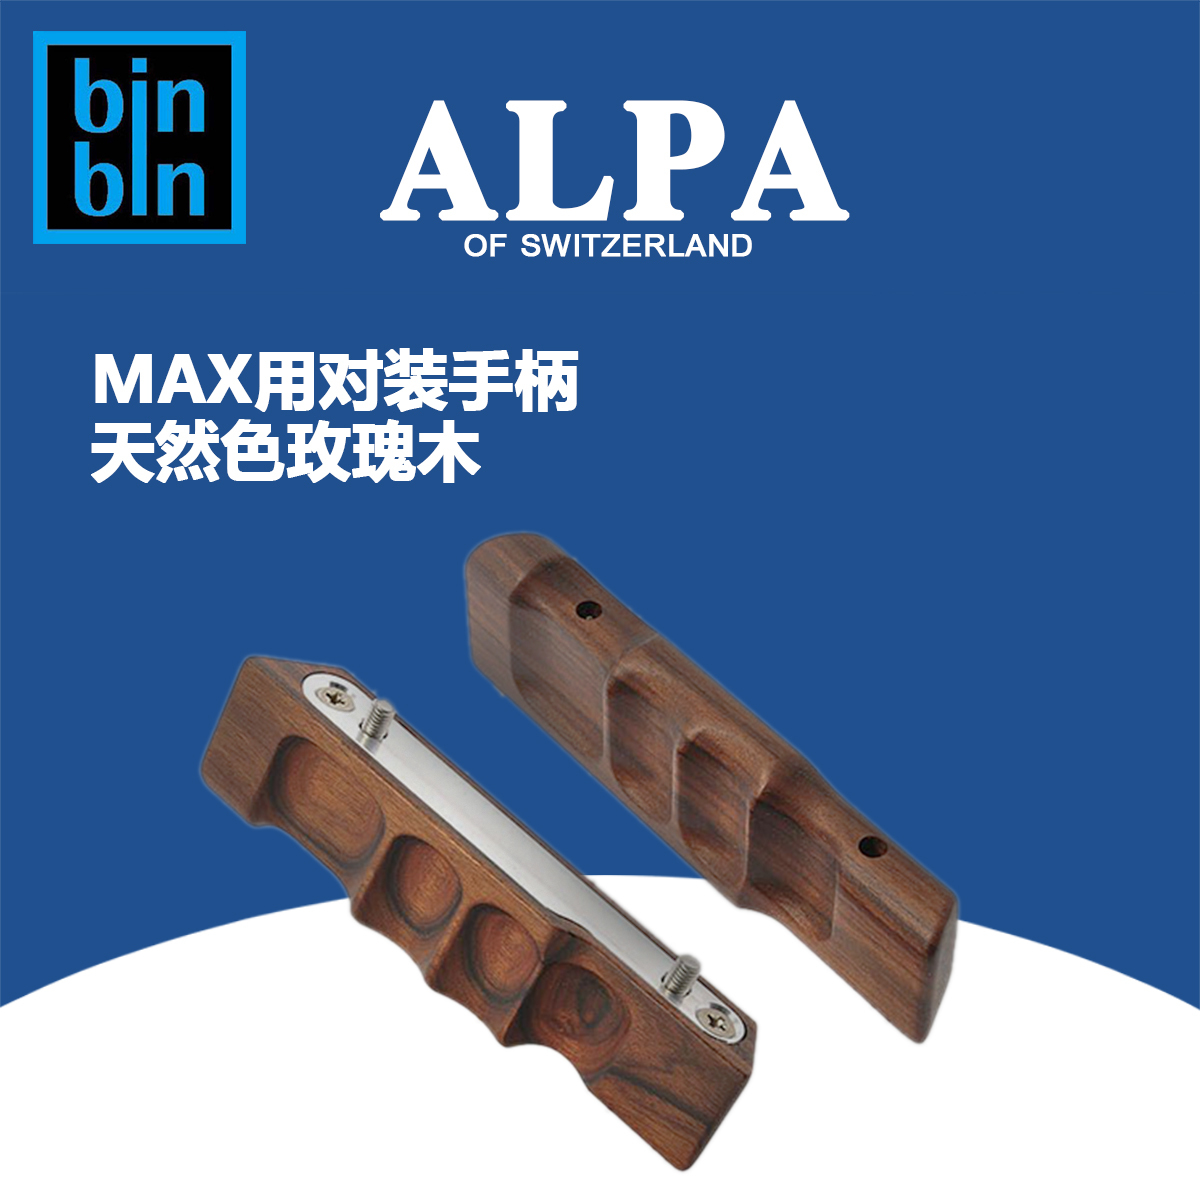 ALPA 阿尔帕 12 MAX 对装手柄 共两款 价格不同 全新正品行货